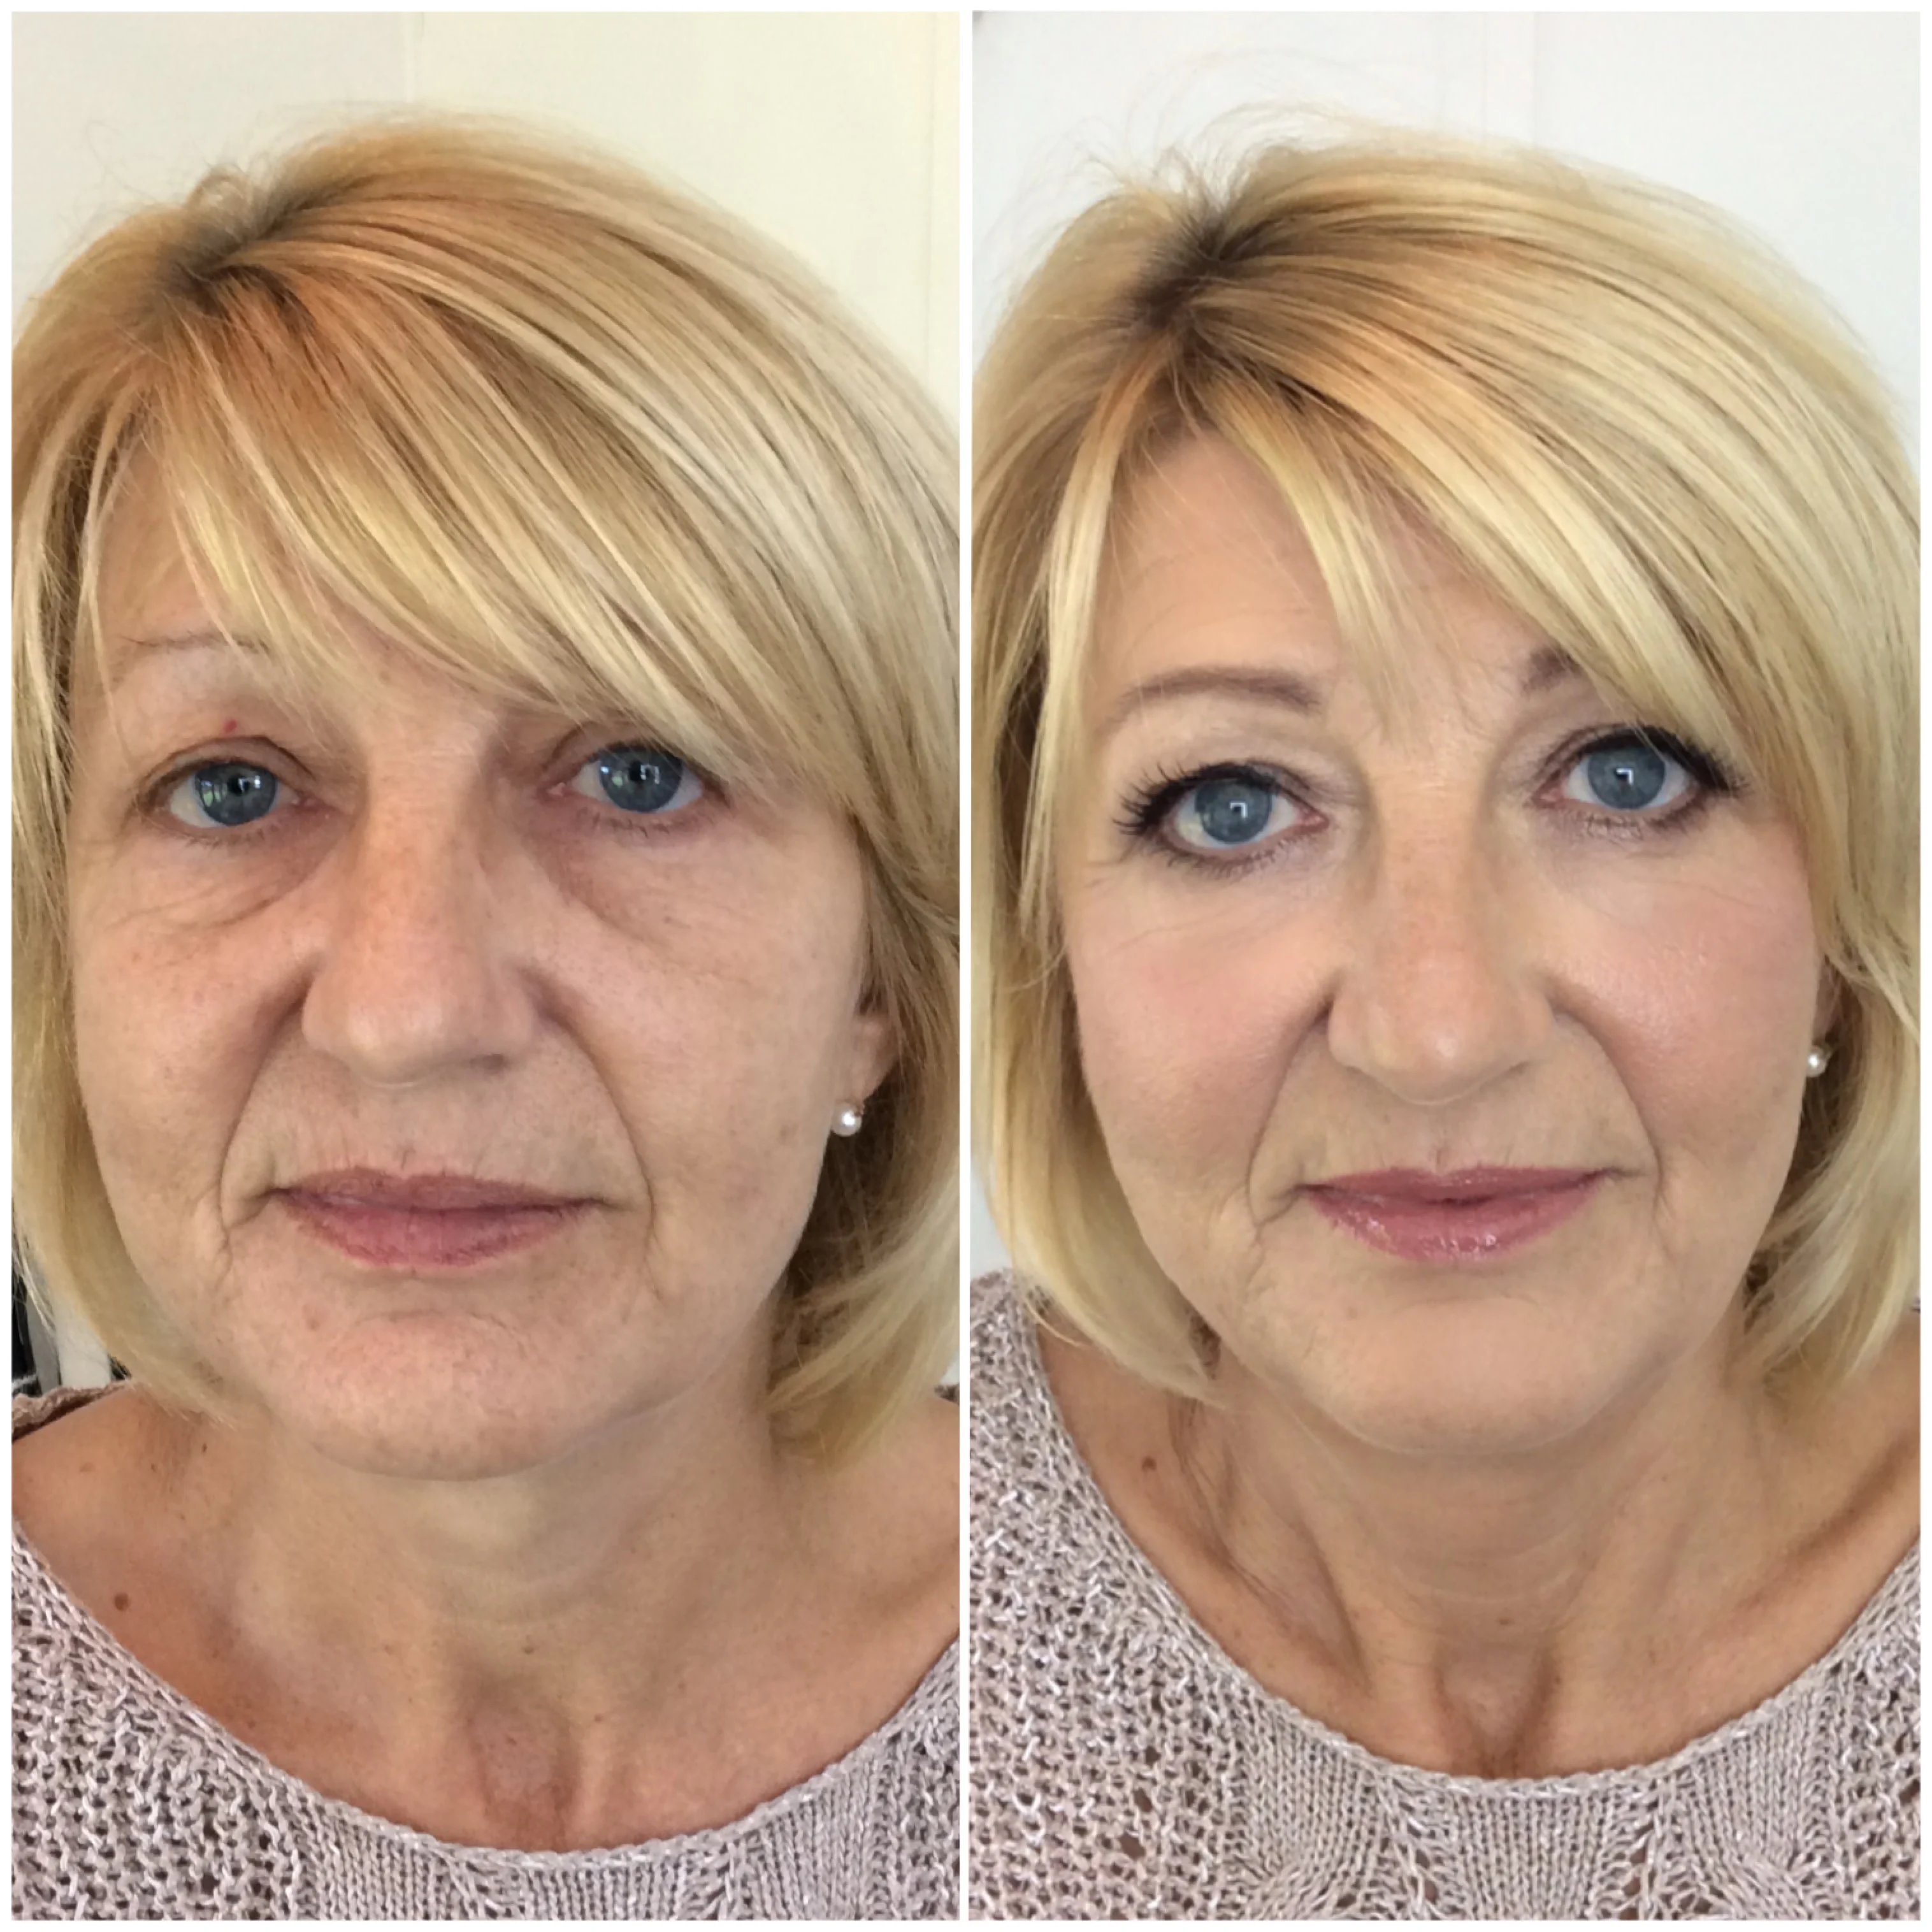 Before and after 1. - Tina Brocklebank